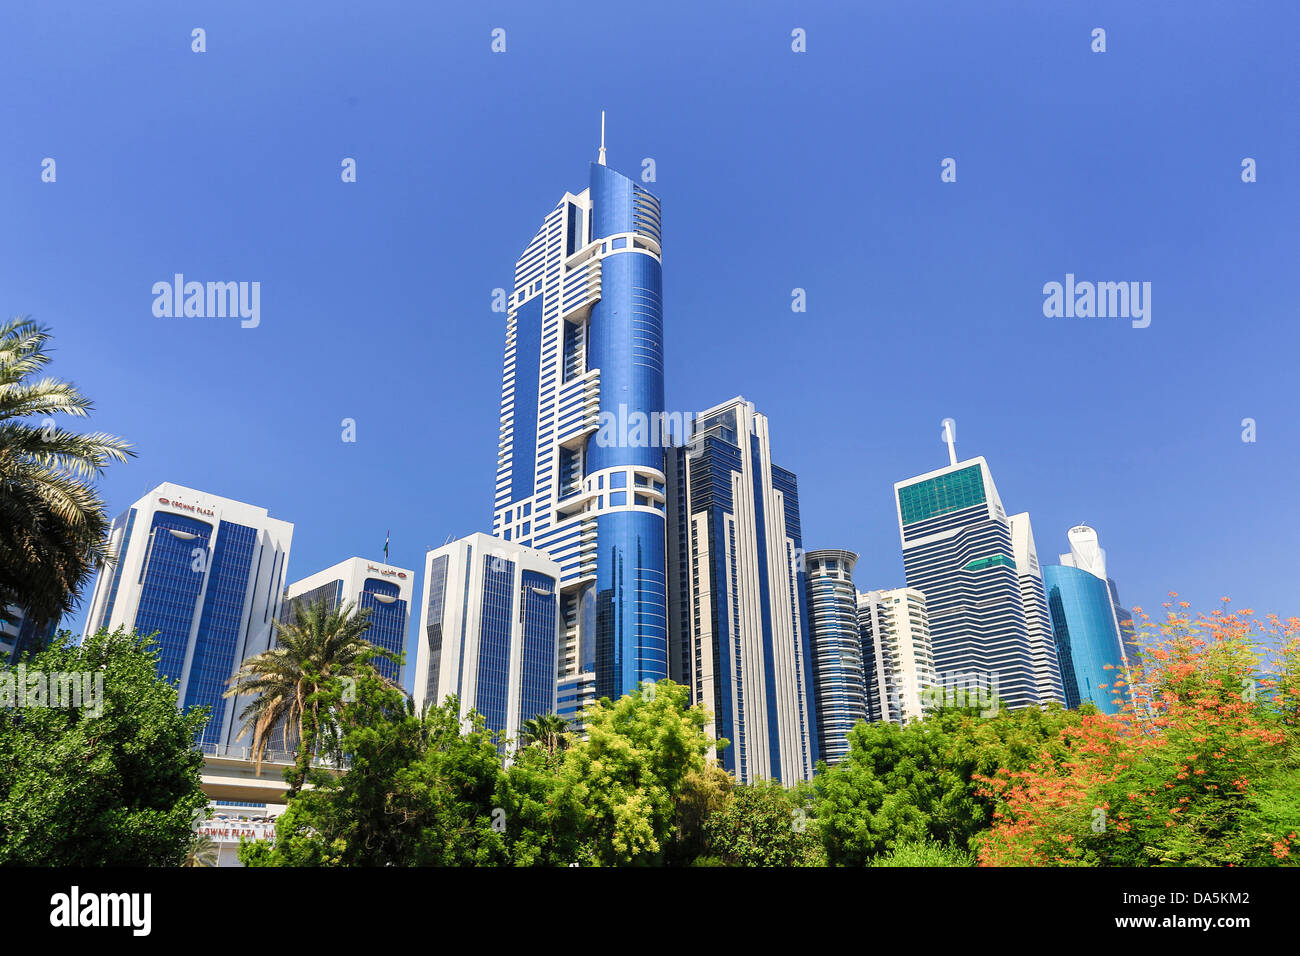 United Arab Emirates, UAE, Dubai, City, buildings, Sheikh Zayed, Road, Dubai, architecture, blue, downtown, emirates, modern, ne Stock Photo